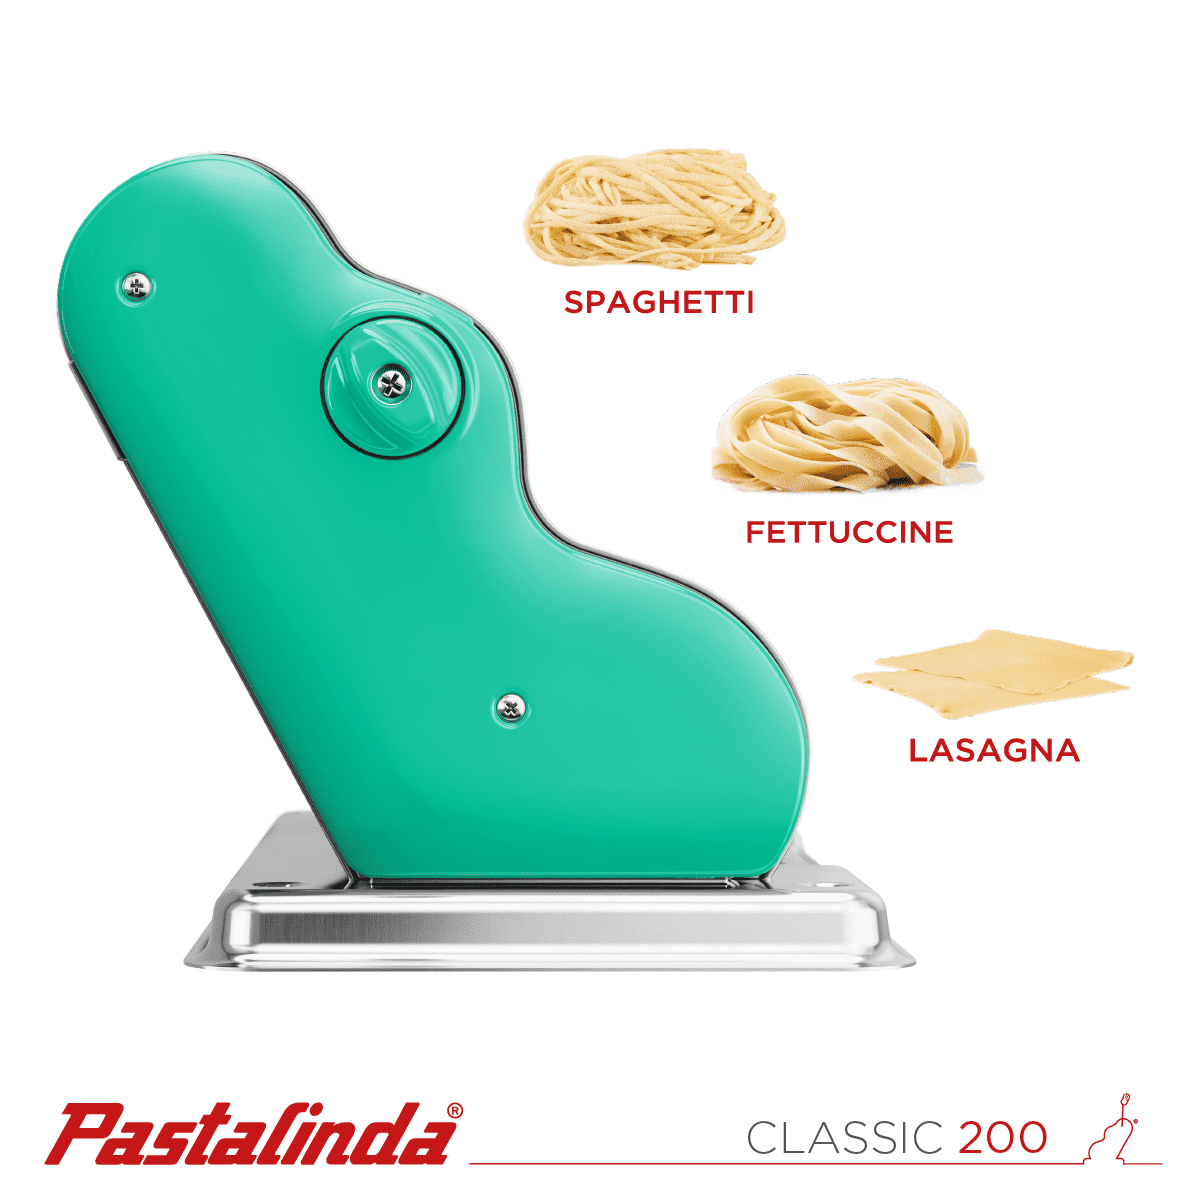 Pastalinda Classic 200 Green Pasta Maker Machine With Hand Crank And Two Clamps - Pastalinda